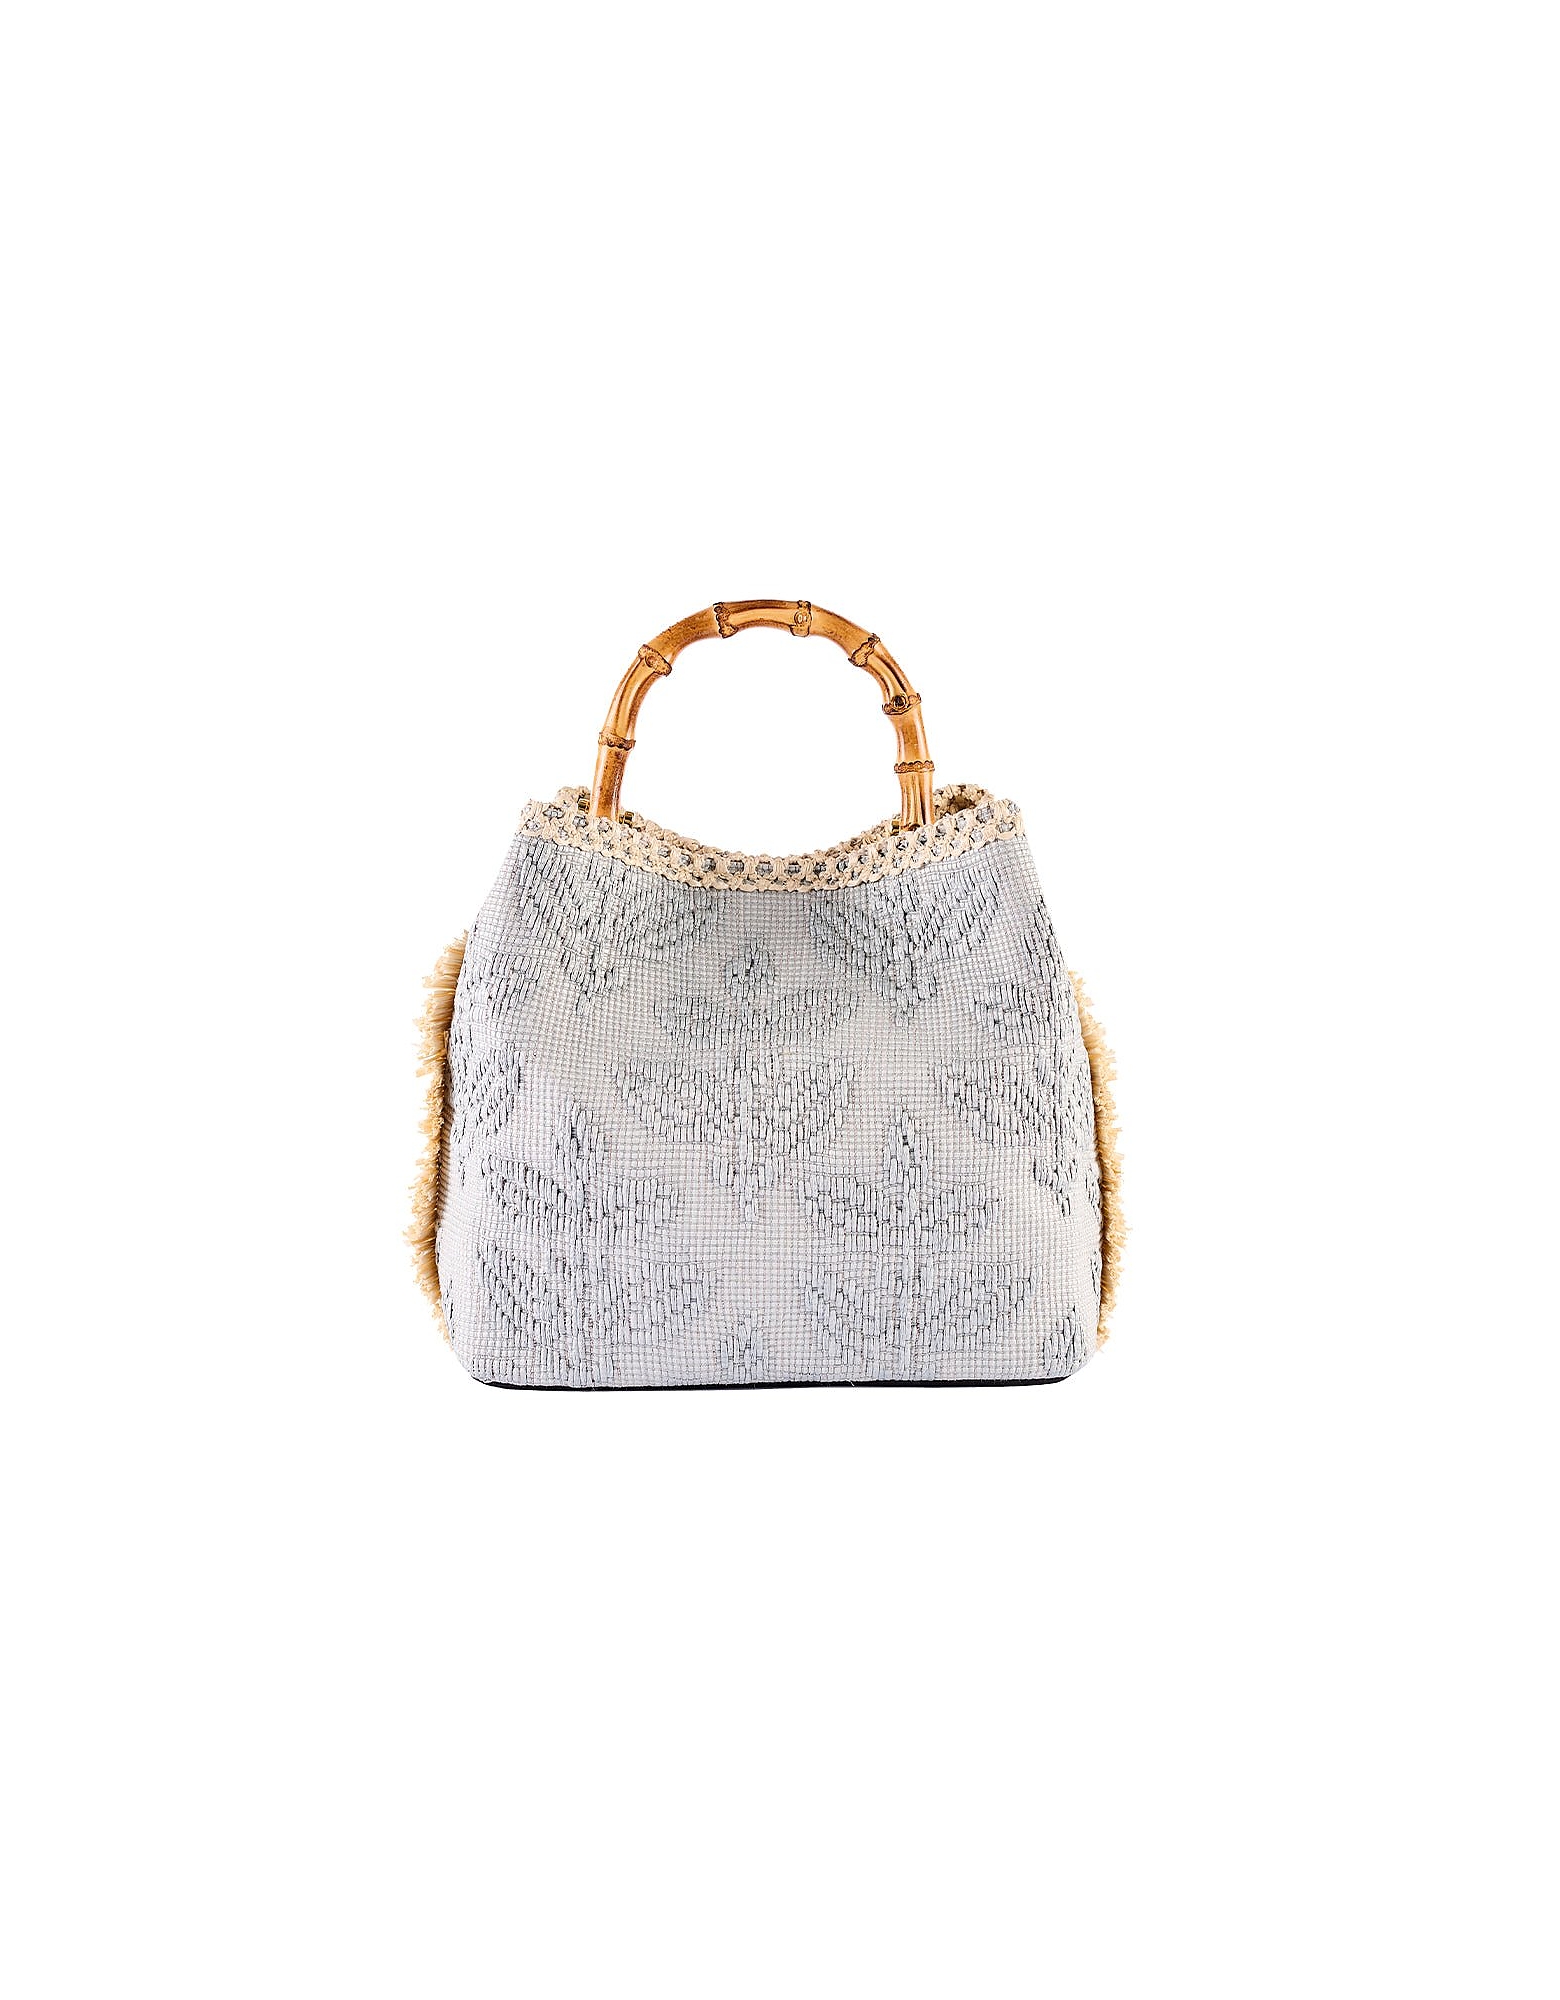 Viamailbag Designer Handbags Coral Chic - Pearl And Natural Top Handle Bag